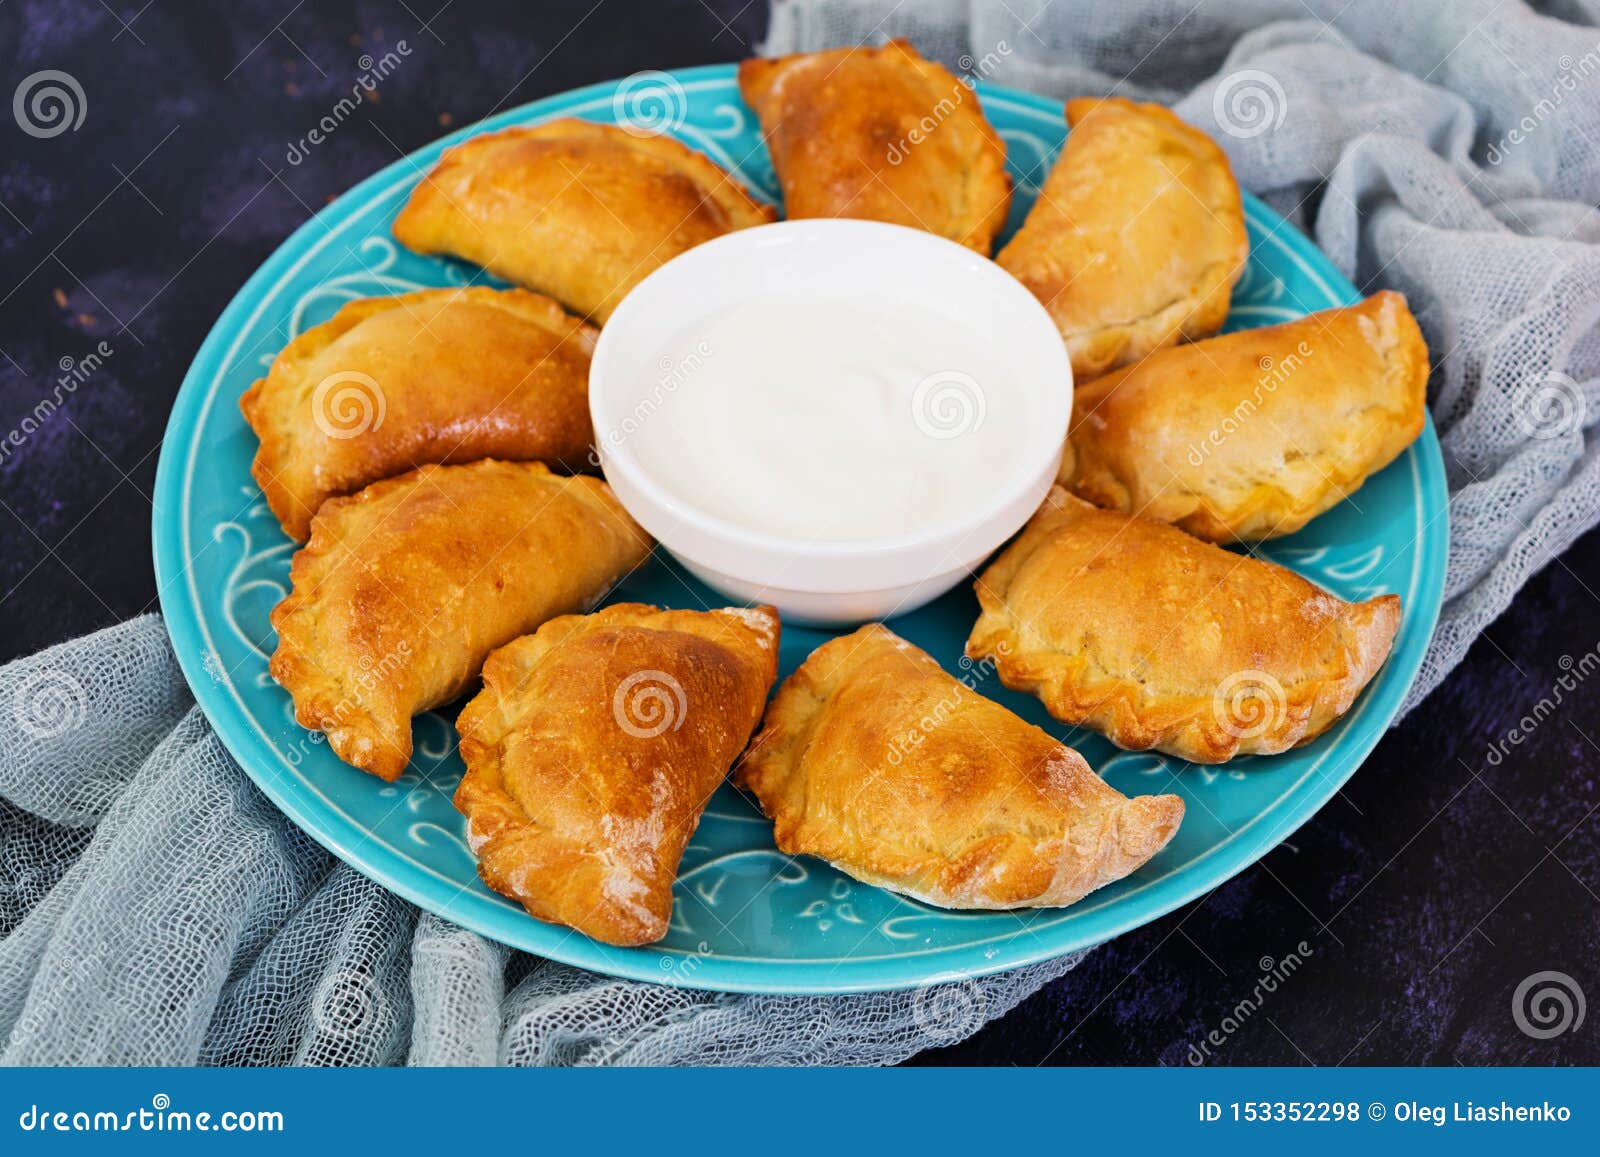 Baked Dumplings on Dark Background Stock Photo - Image of dark, diet ...